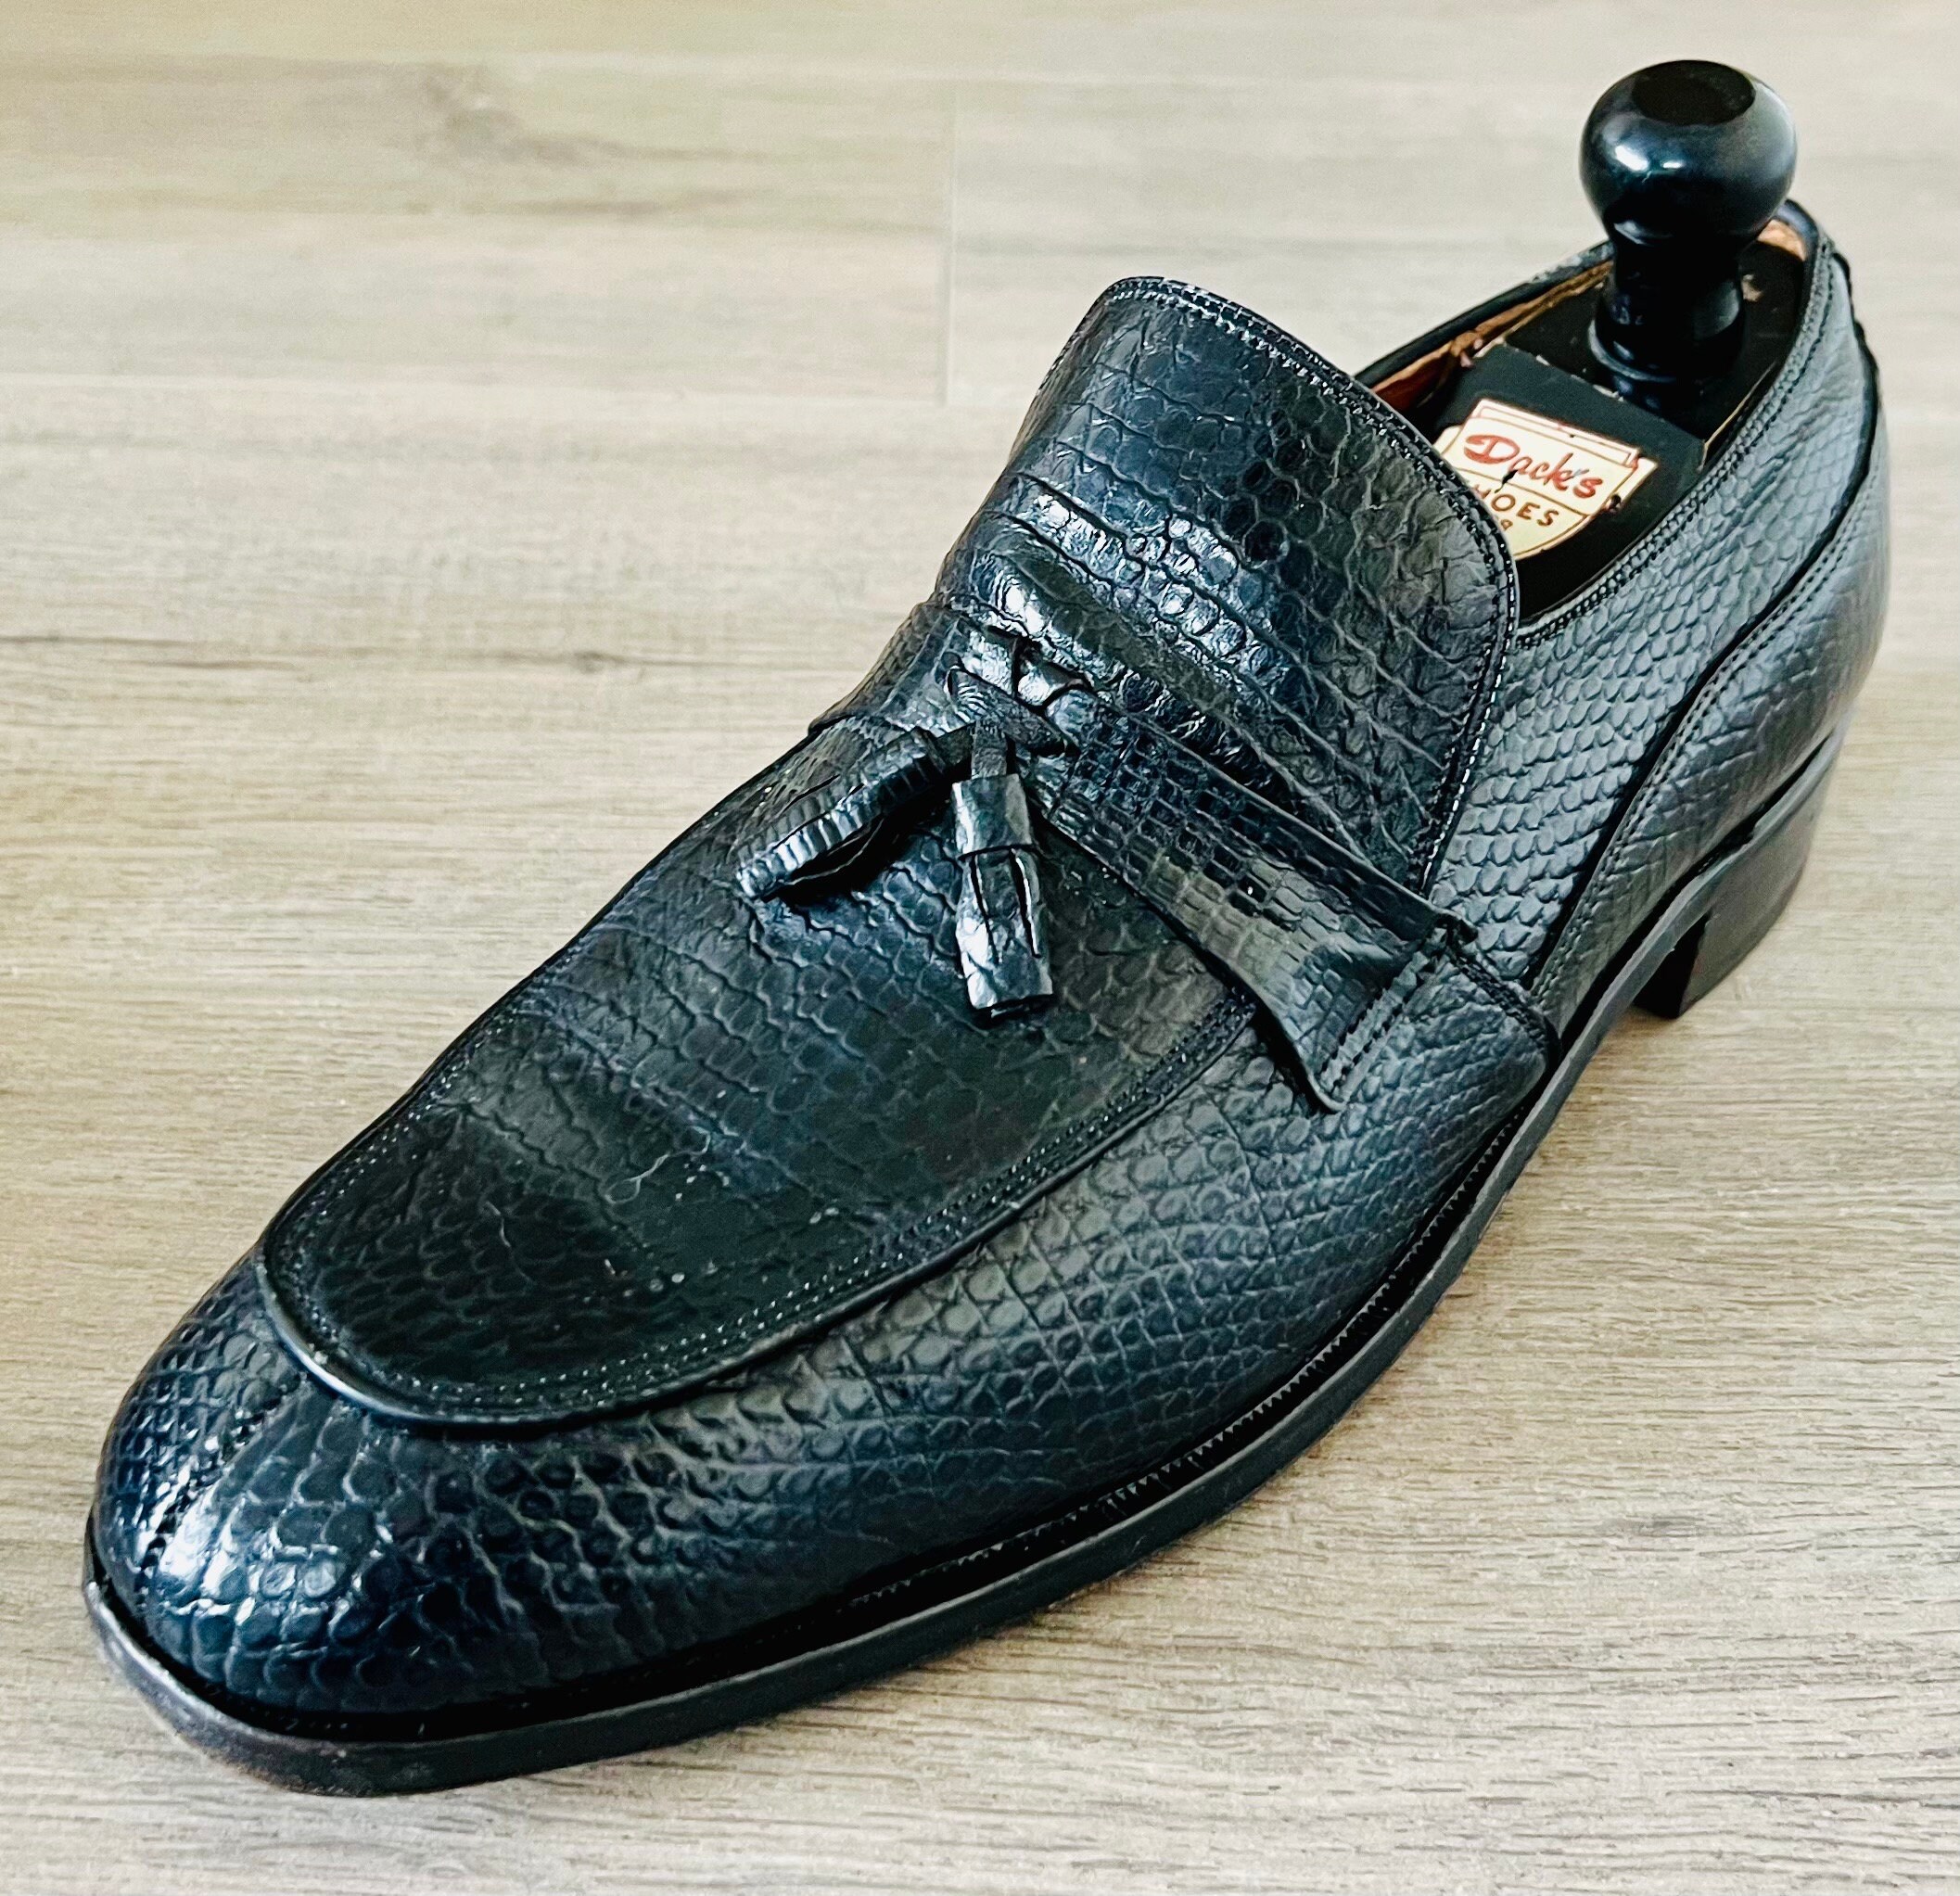 Gucci Black Lizard Embossed Horsebit Loafers Size 44 Gucci